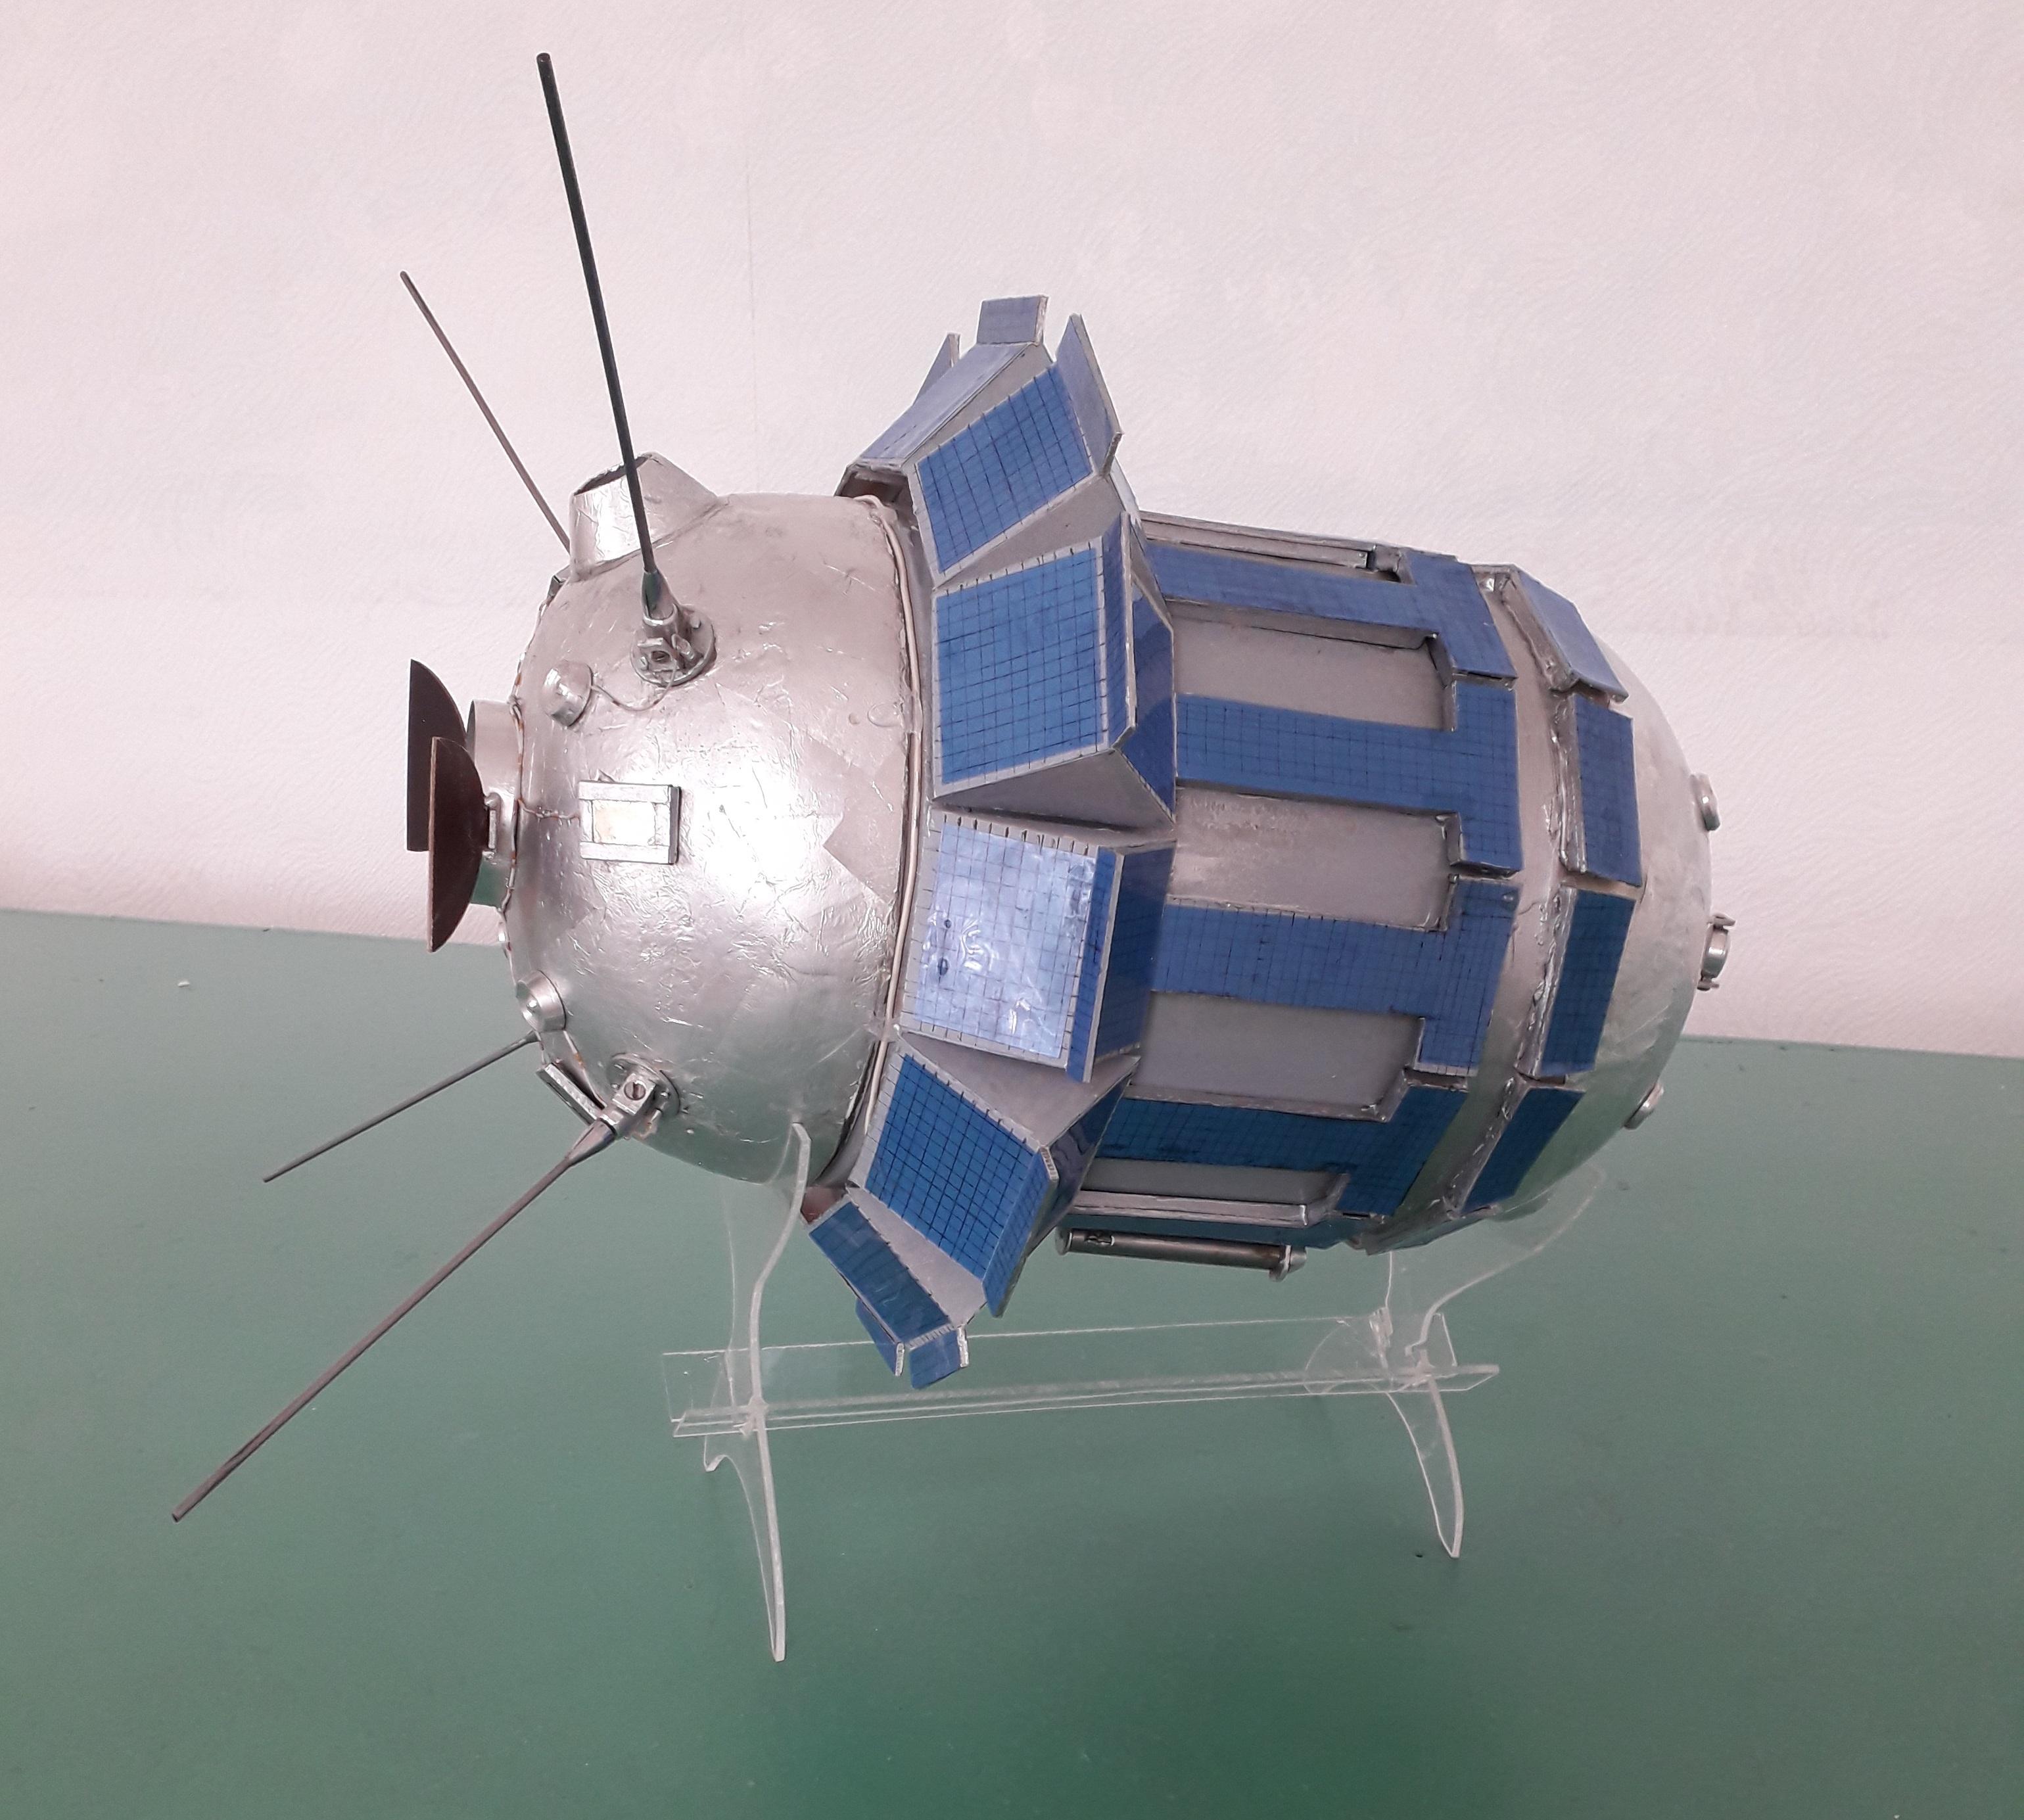 Будет ли луна 3. Межпланетная станция Луна 3. 4 Октября 1959 — запущена АМС «Луна-3»,. Луна-3 автоматическая межпланетная. Луна-10 автоматическая межпланетная станция.